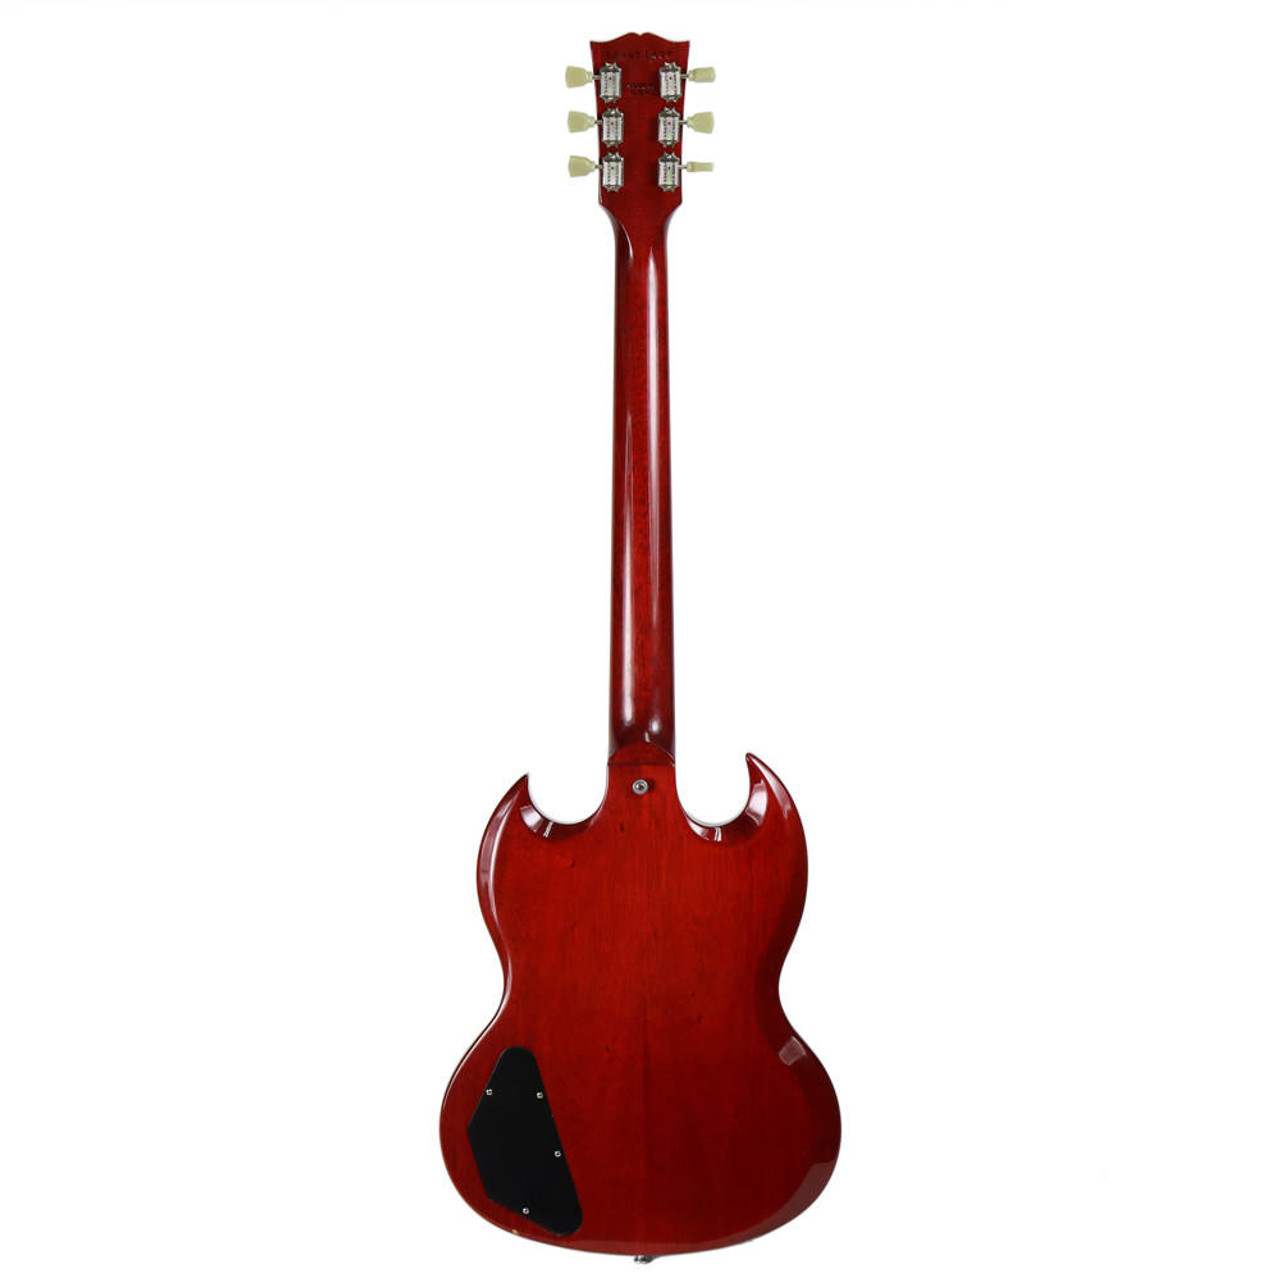 2007 Gibson SG Standard in Cherry